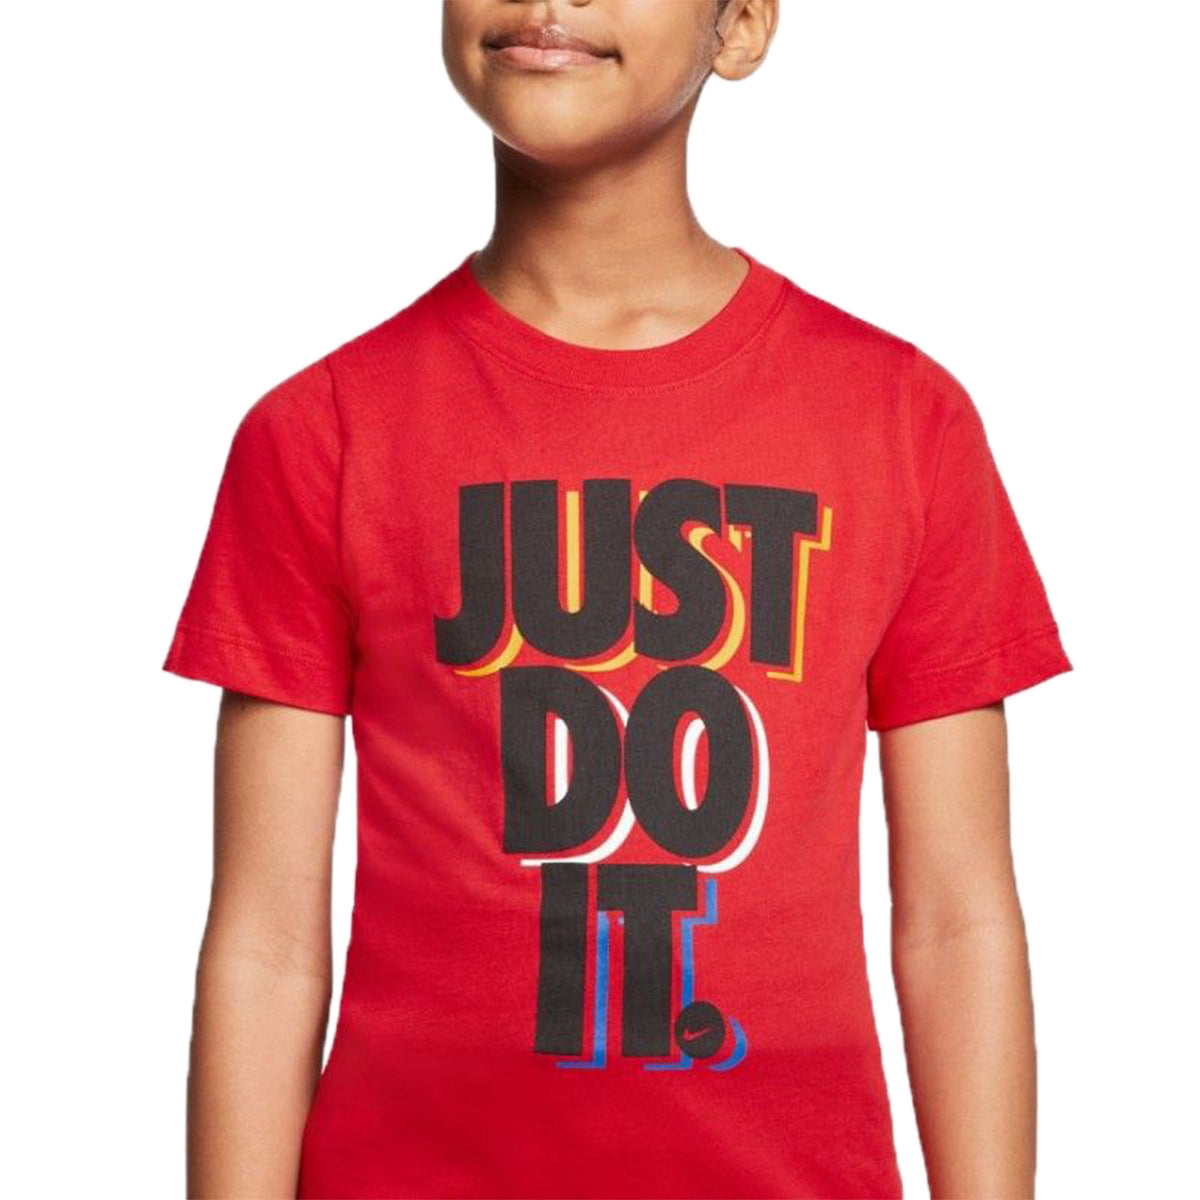 Nike Sportswear Just Do It T-shir Big Kids Style : Cu4569